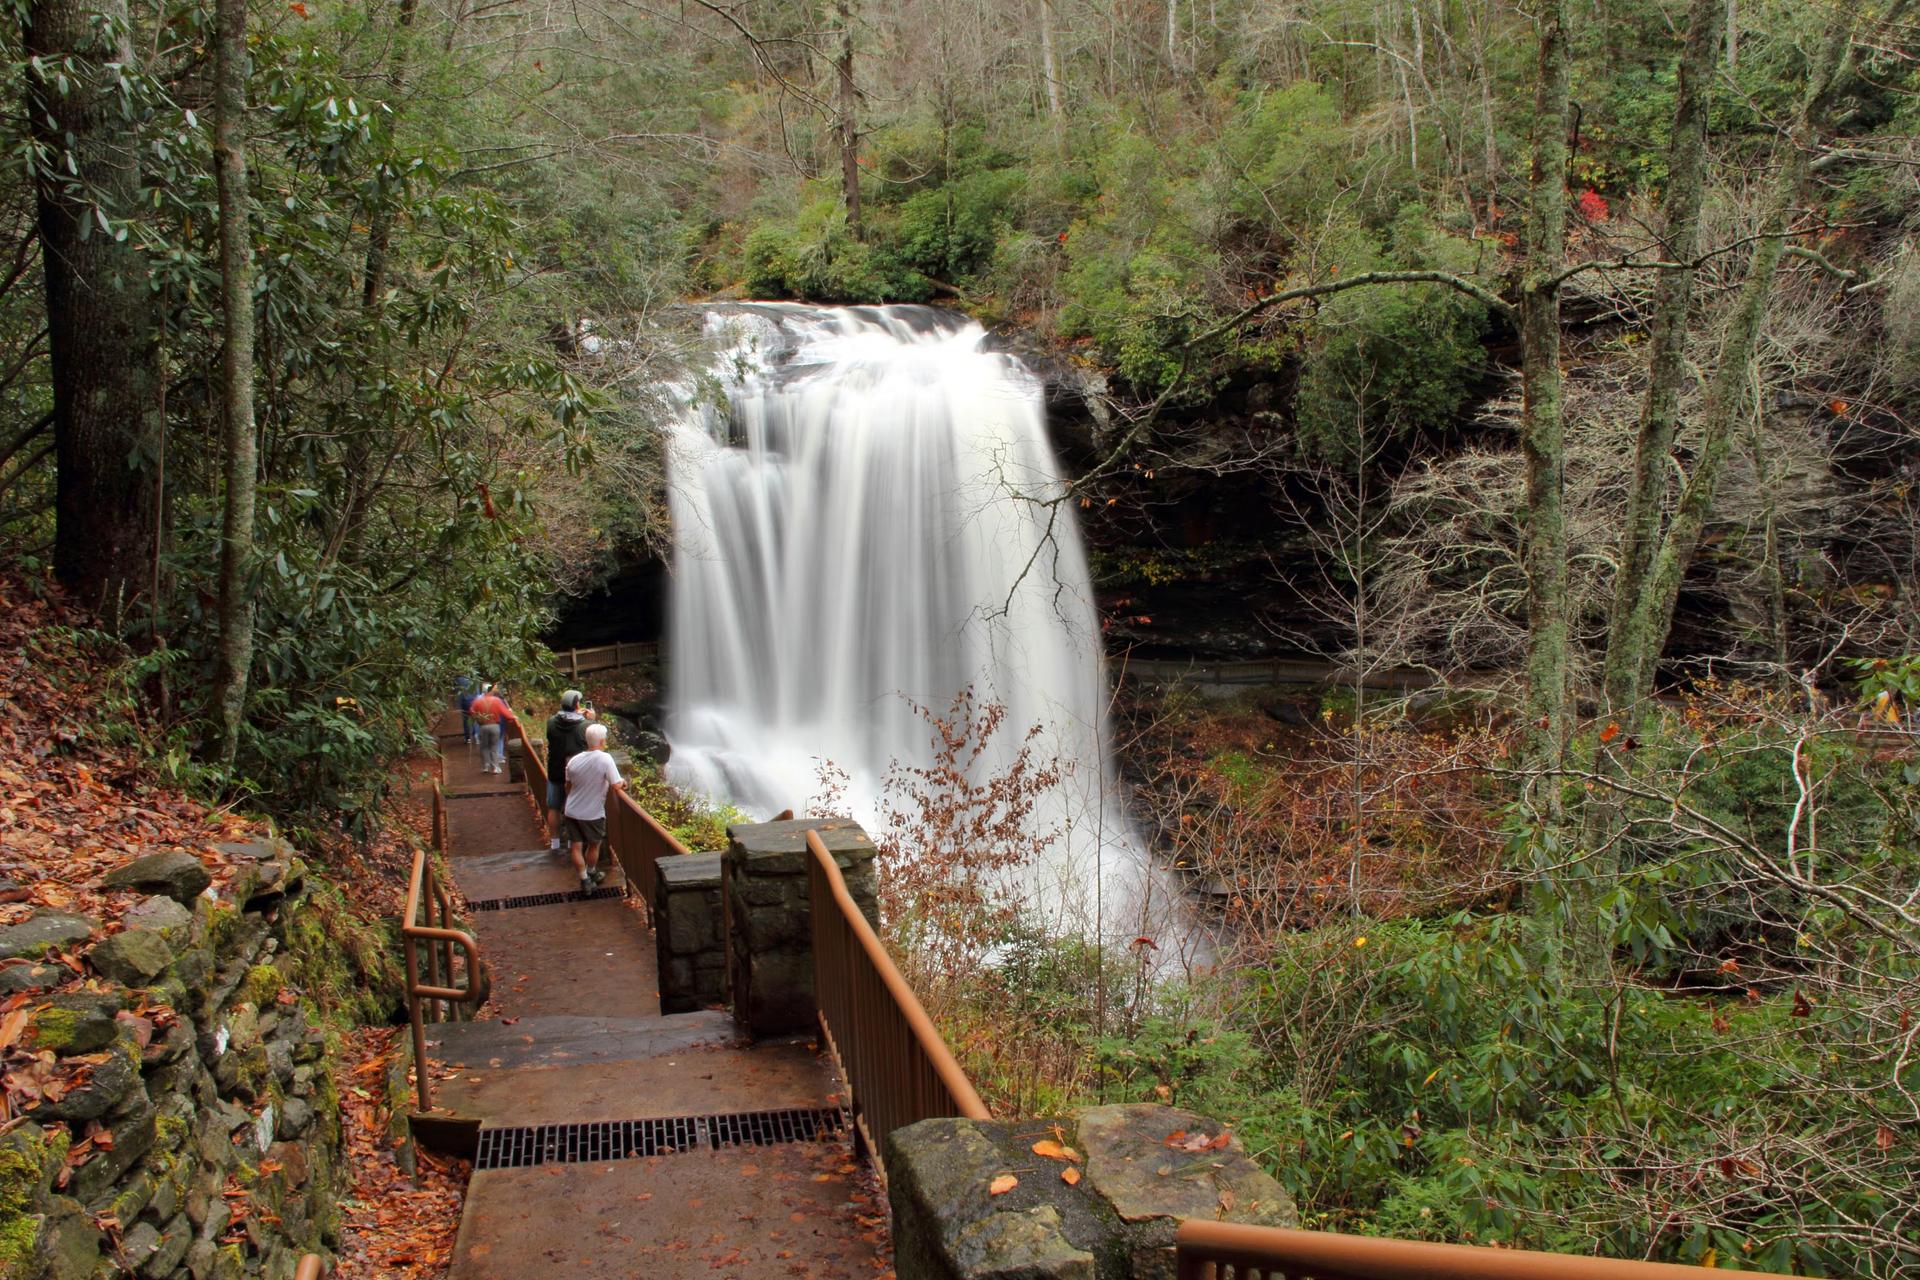 Dry Falls in the Nantahala National Forest, North Carolina